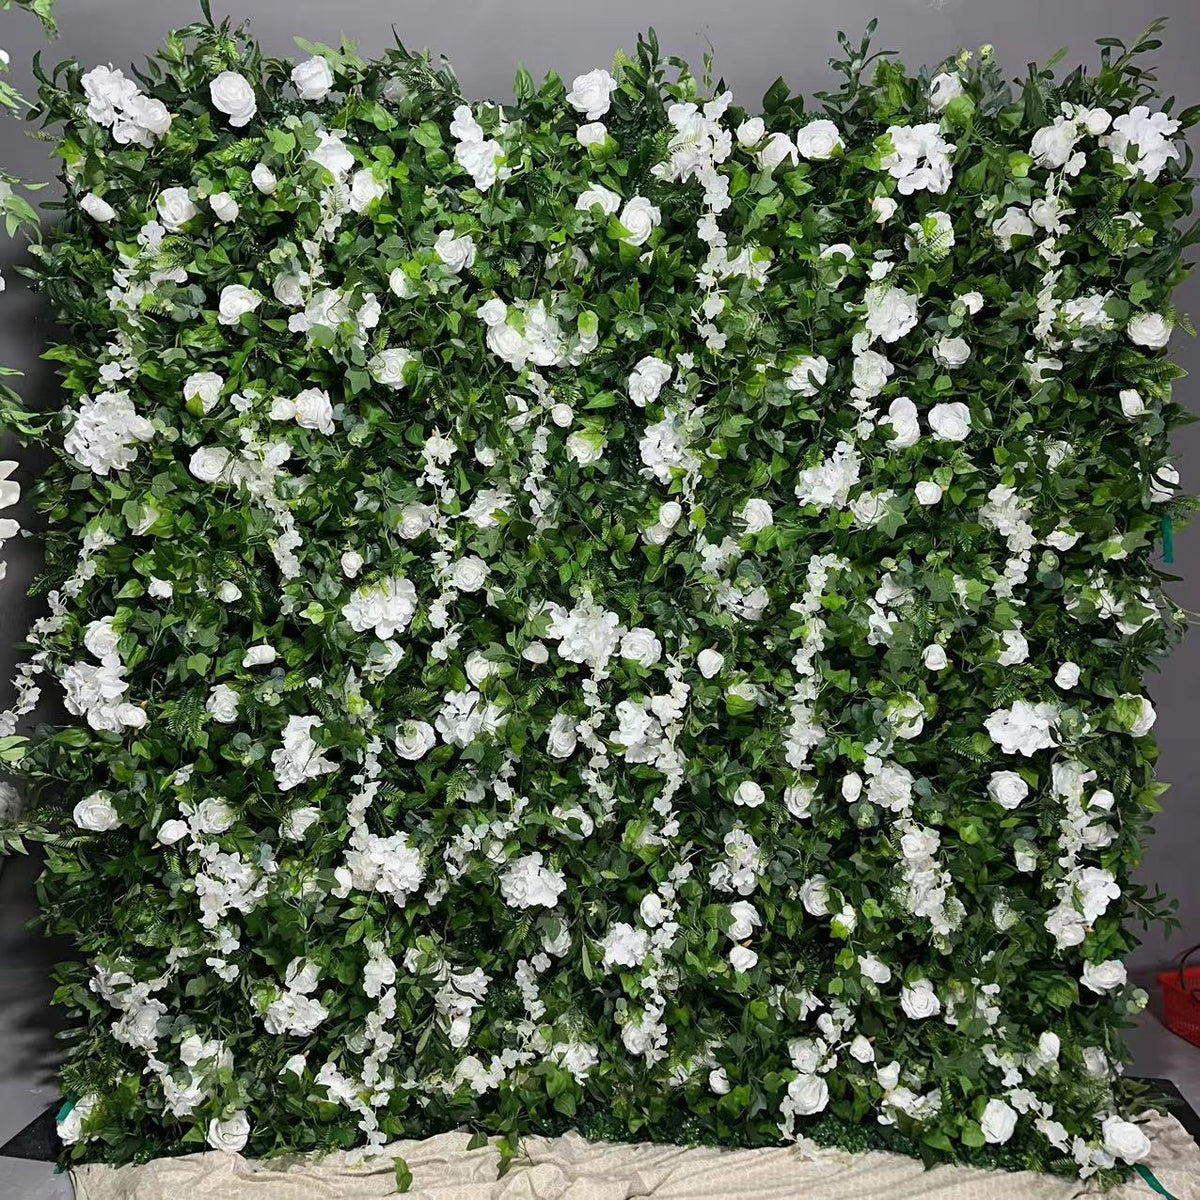 3D Artificial Flower Wall Arrangement Wedding Party Birthday Backdrop Decor HQ3960